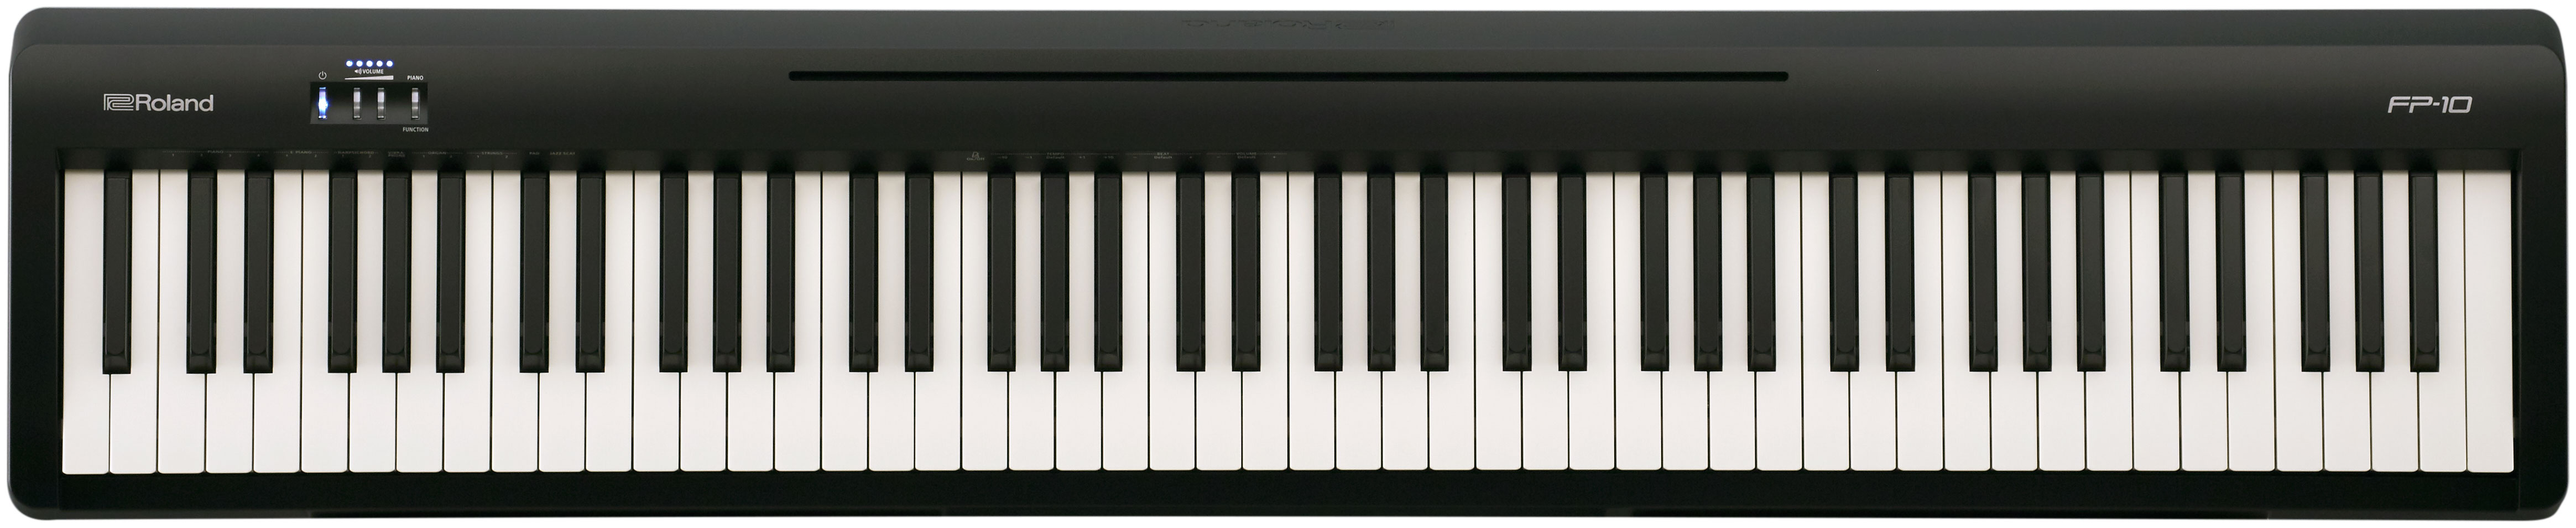 glide harpun chokolade Casio PX-160 vs Roland FP-10 | Digital Piano Comparison